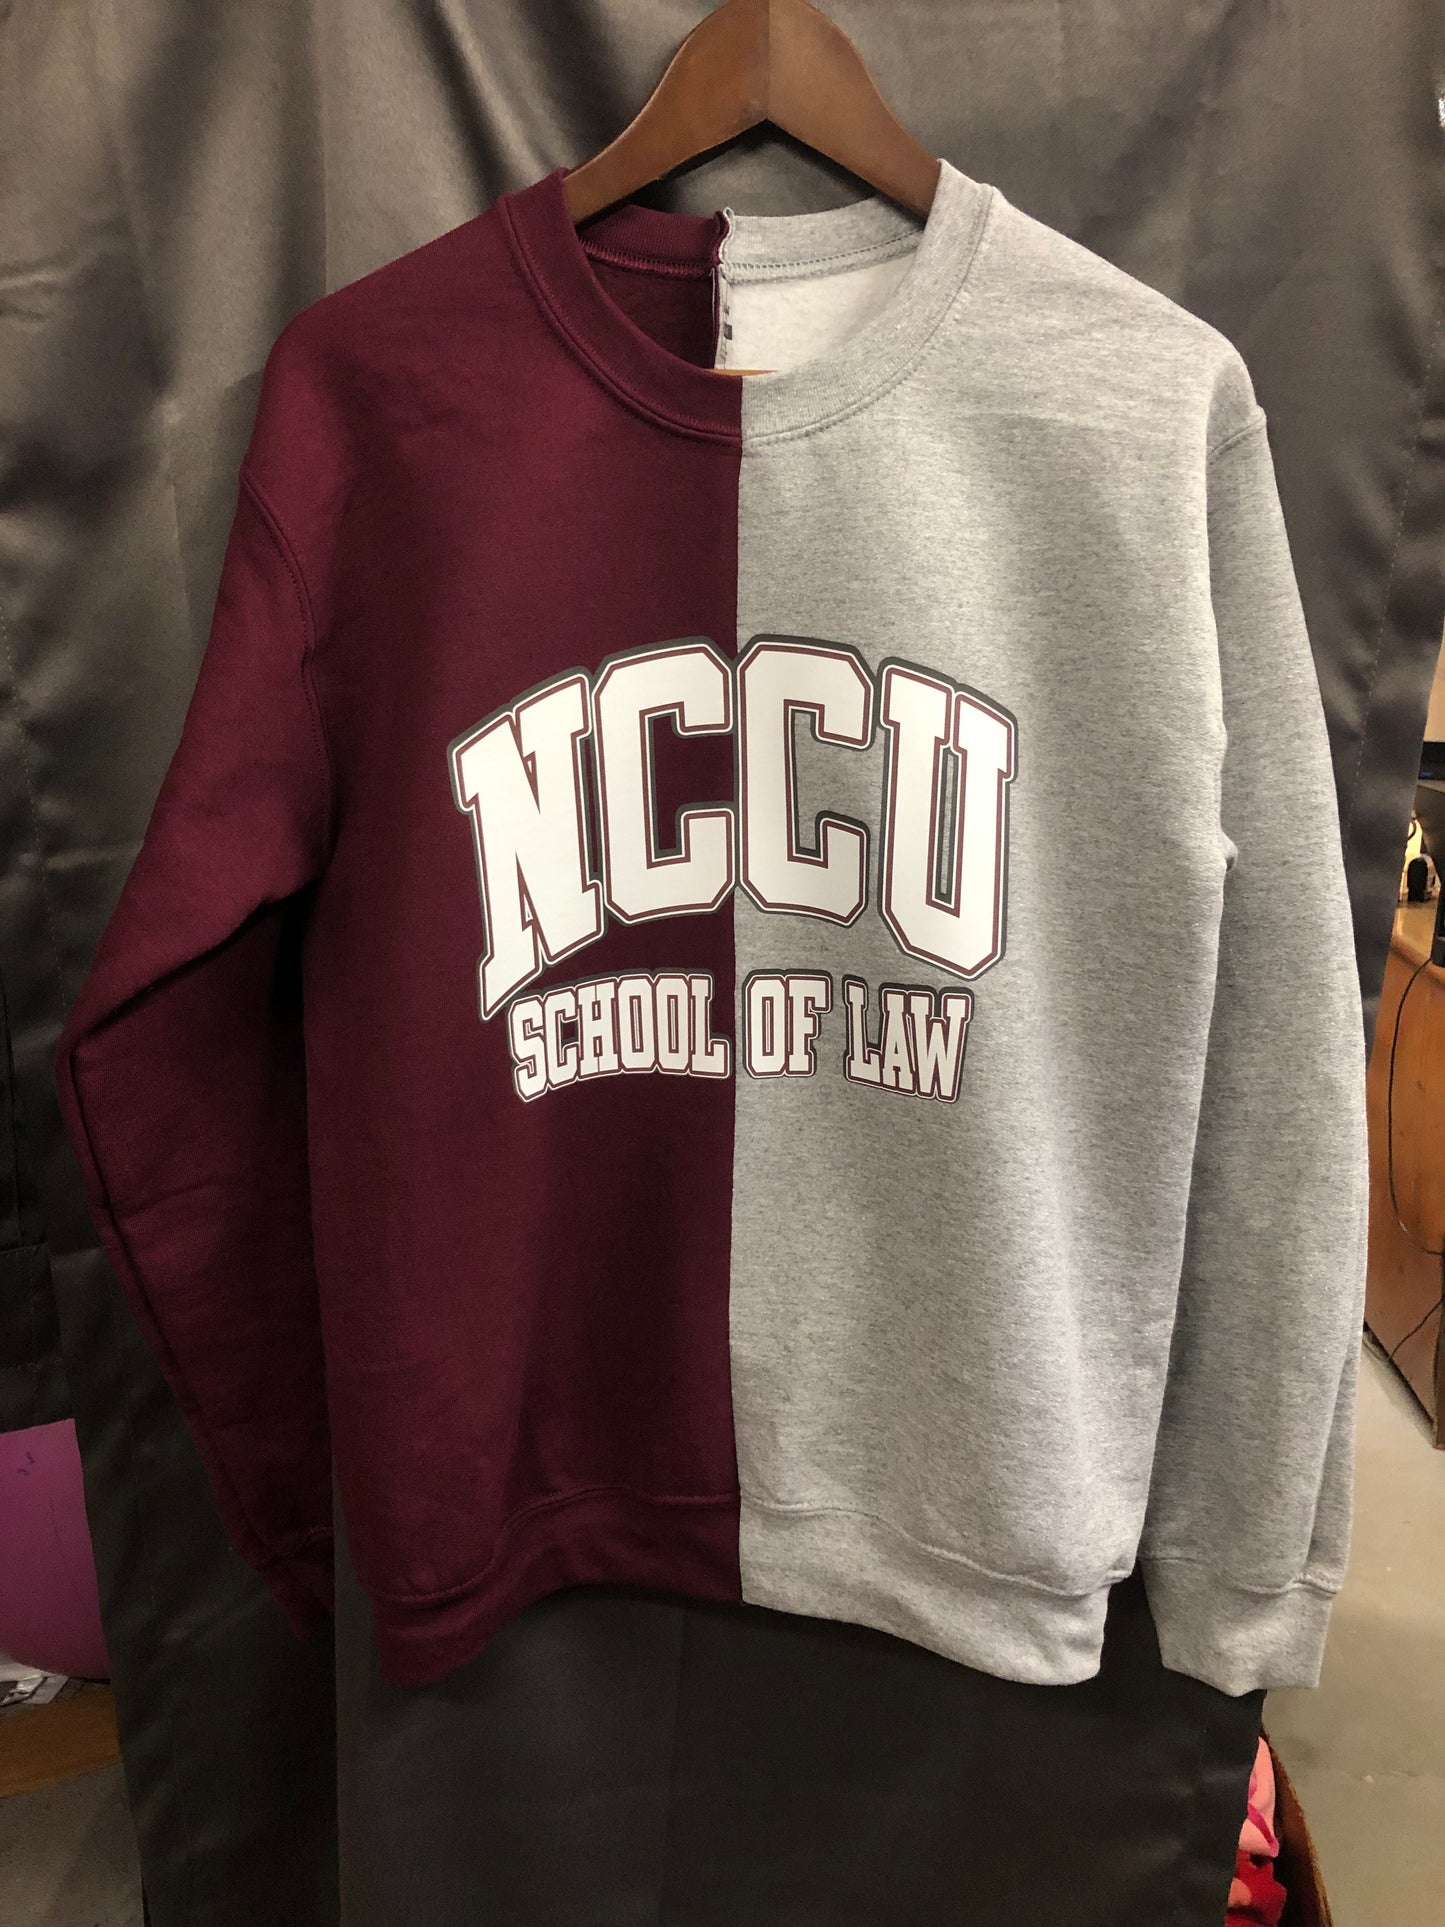 Handmade NCCU School of Law Maroon and Gray Half and Half Crew Neck Sweatshirt